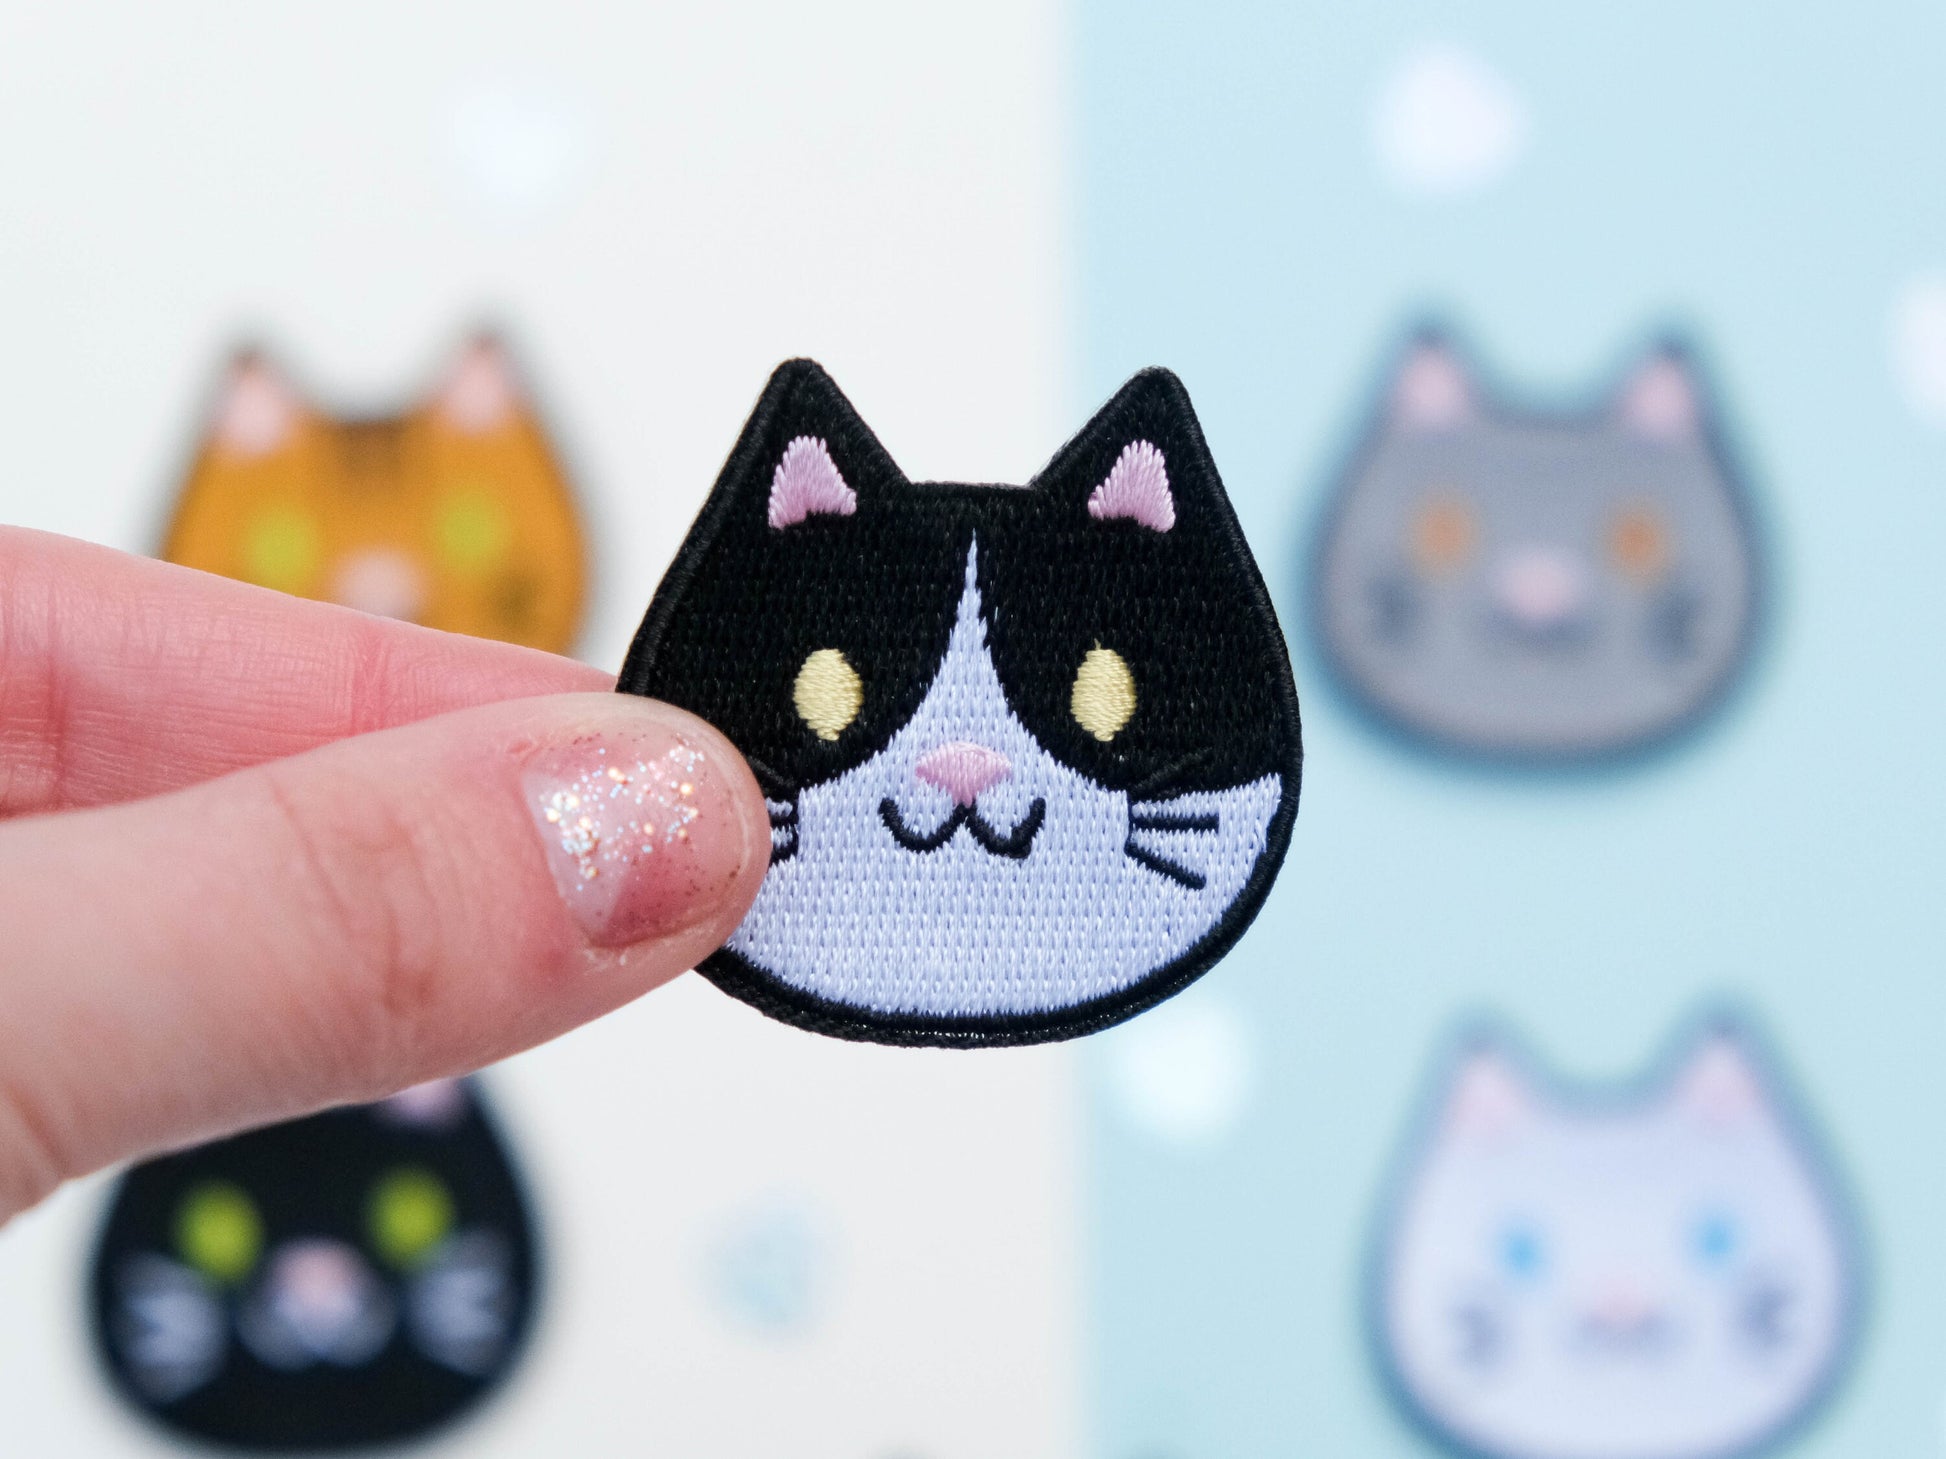 Black Tuxedo - Cat Pin